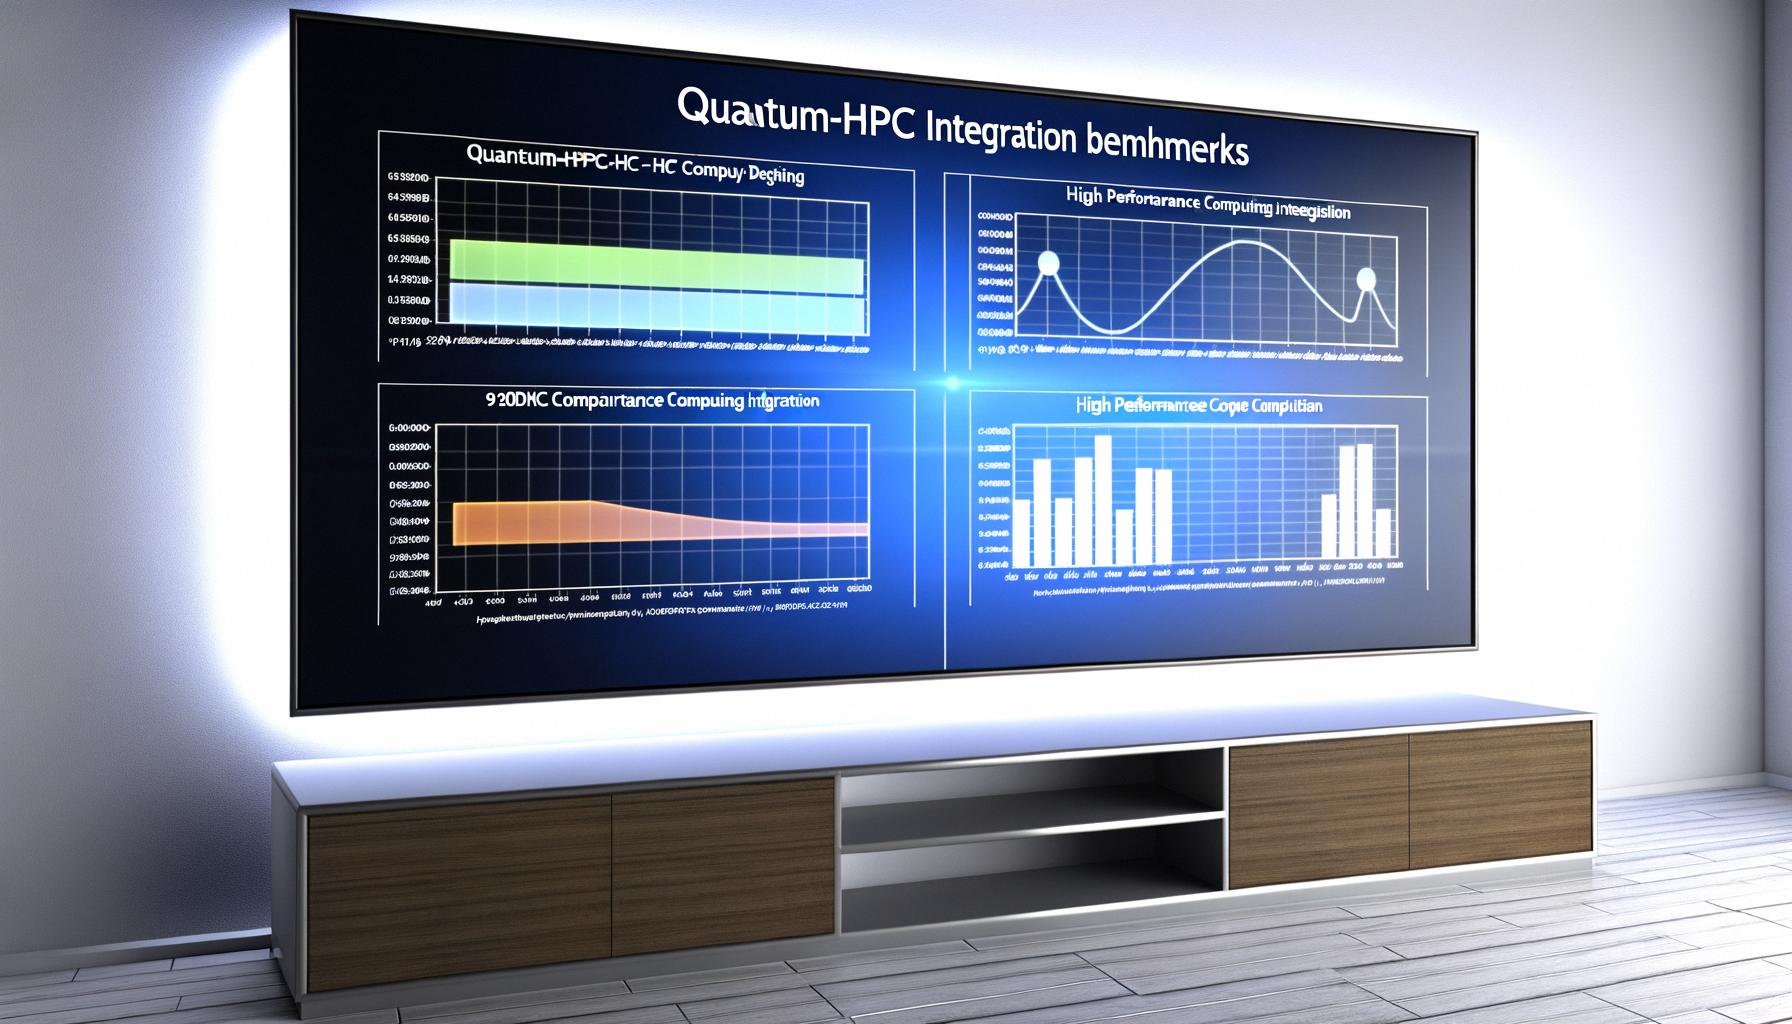 Quantum-HPC integration benchmarks established Balanced News